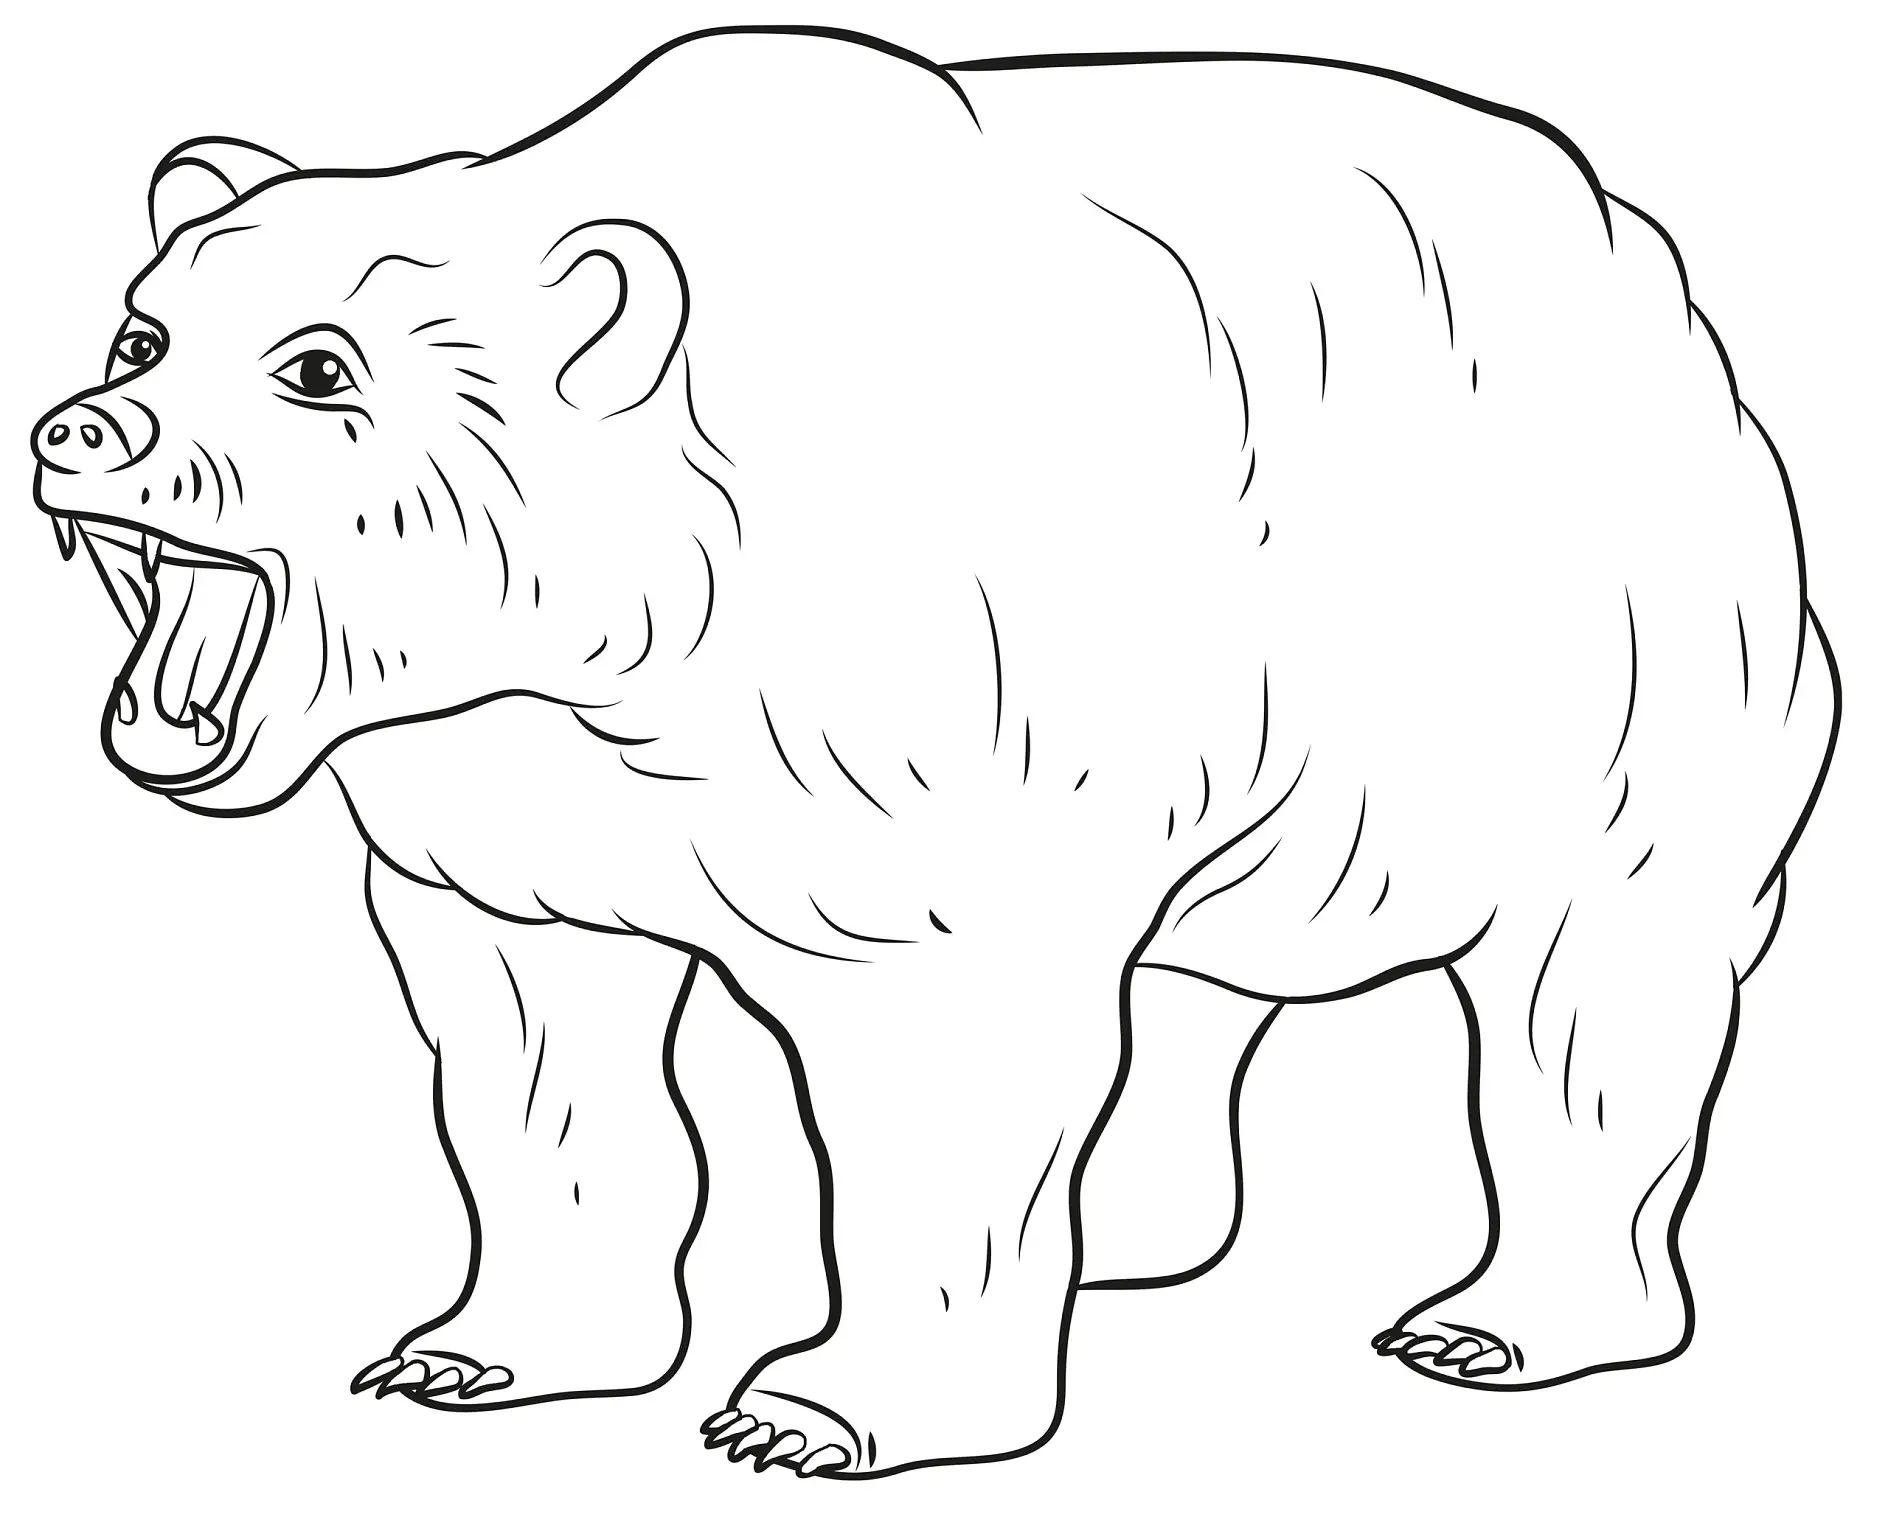 Ausmalbild brüllender Bär mit geöffnetem Maul und detailliertem Fell